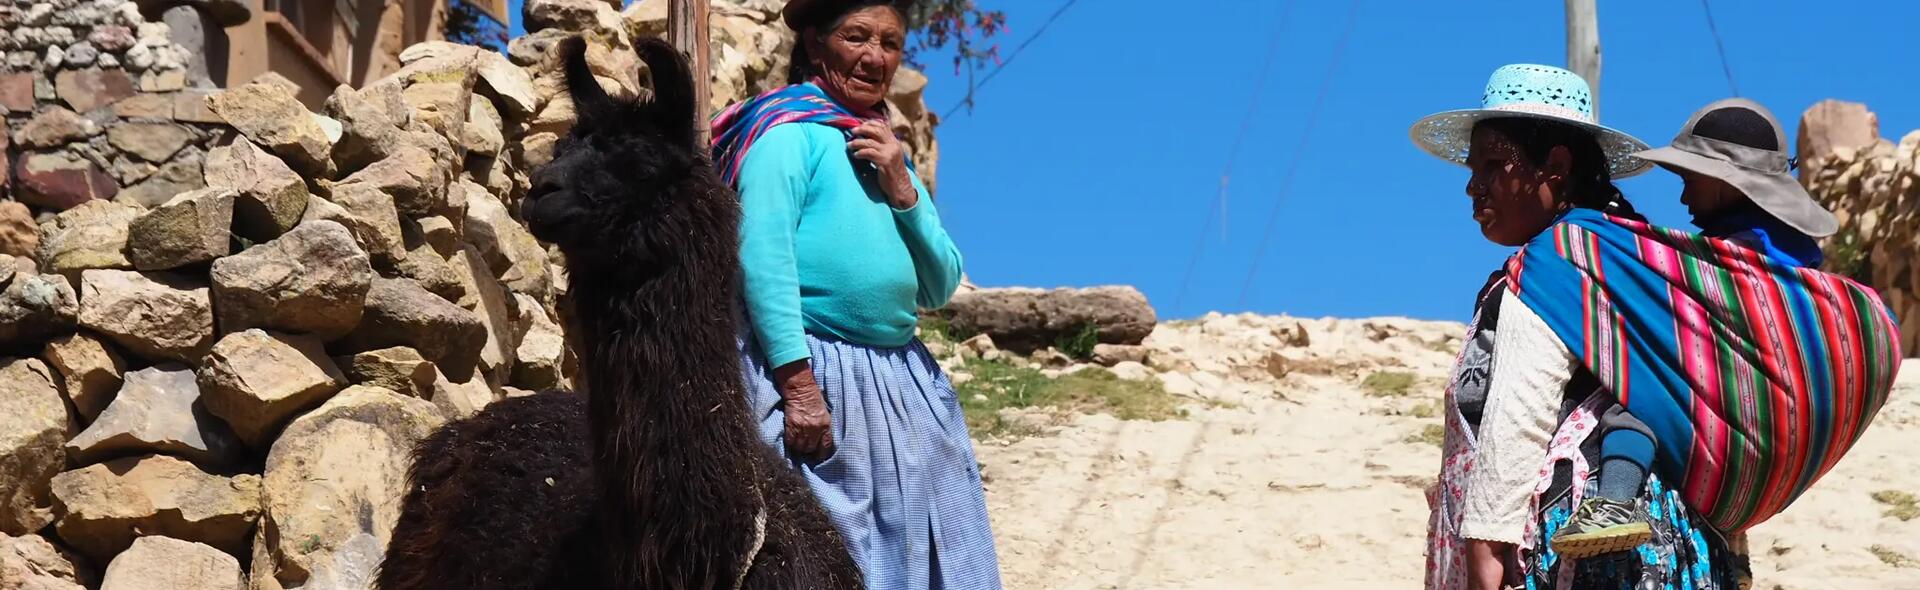 Pérou Chili femmes 